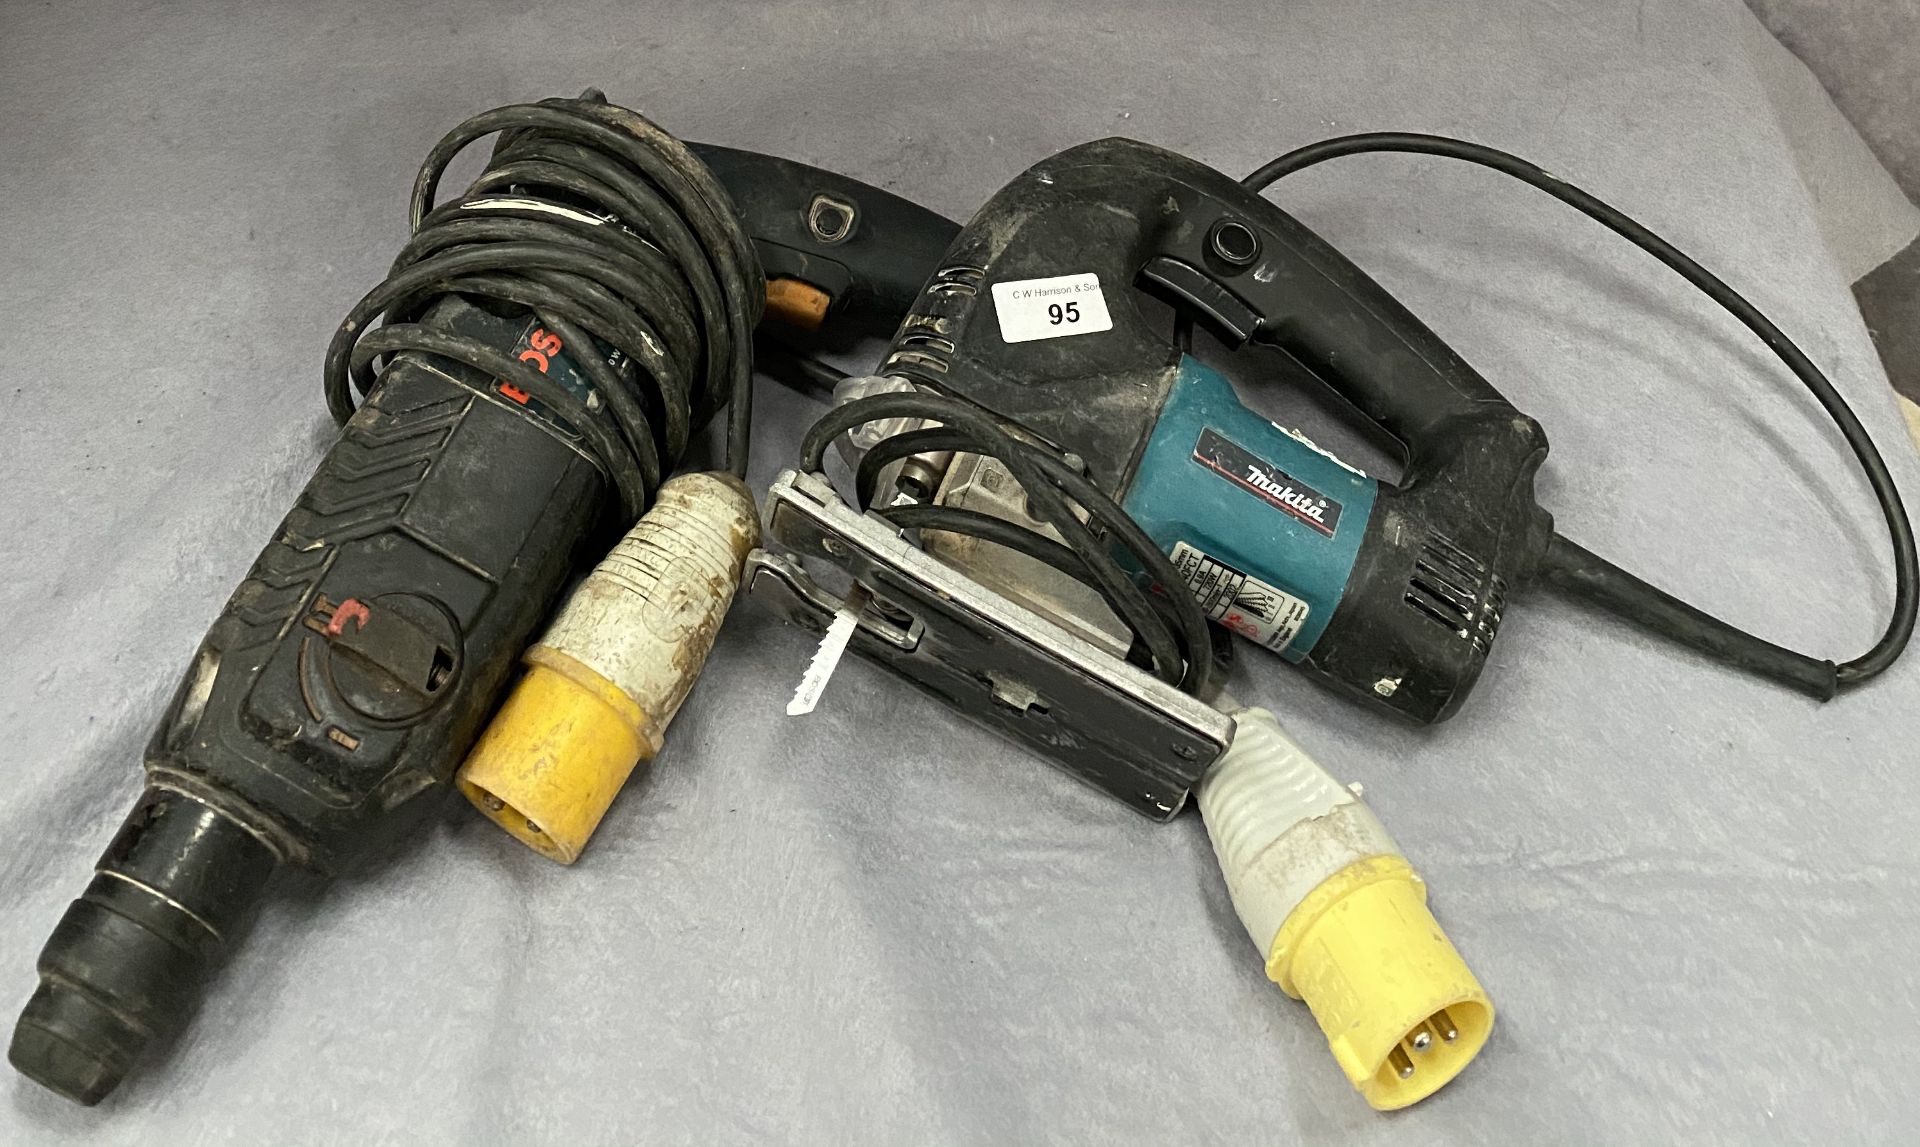 A Bosch 110v electric drill and a Makita 110v jigsaw